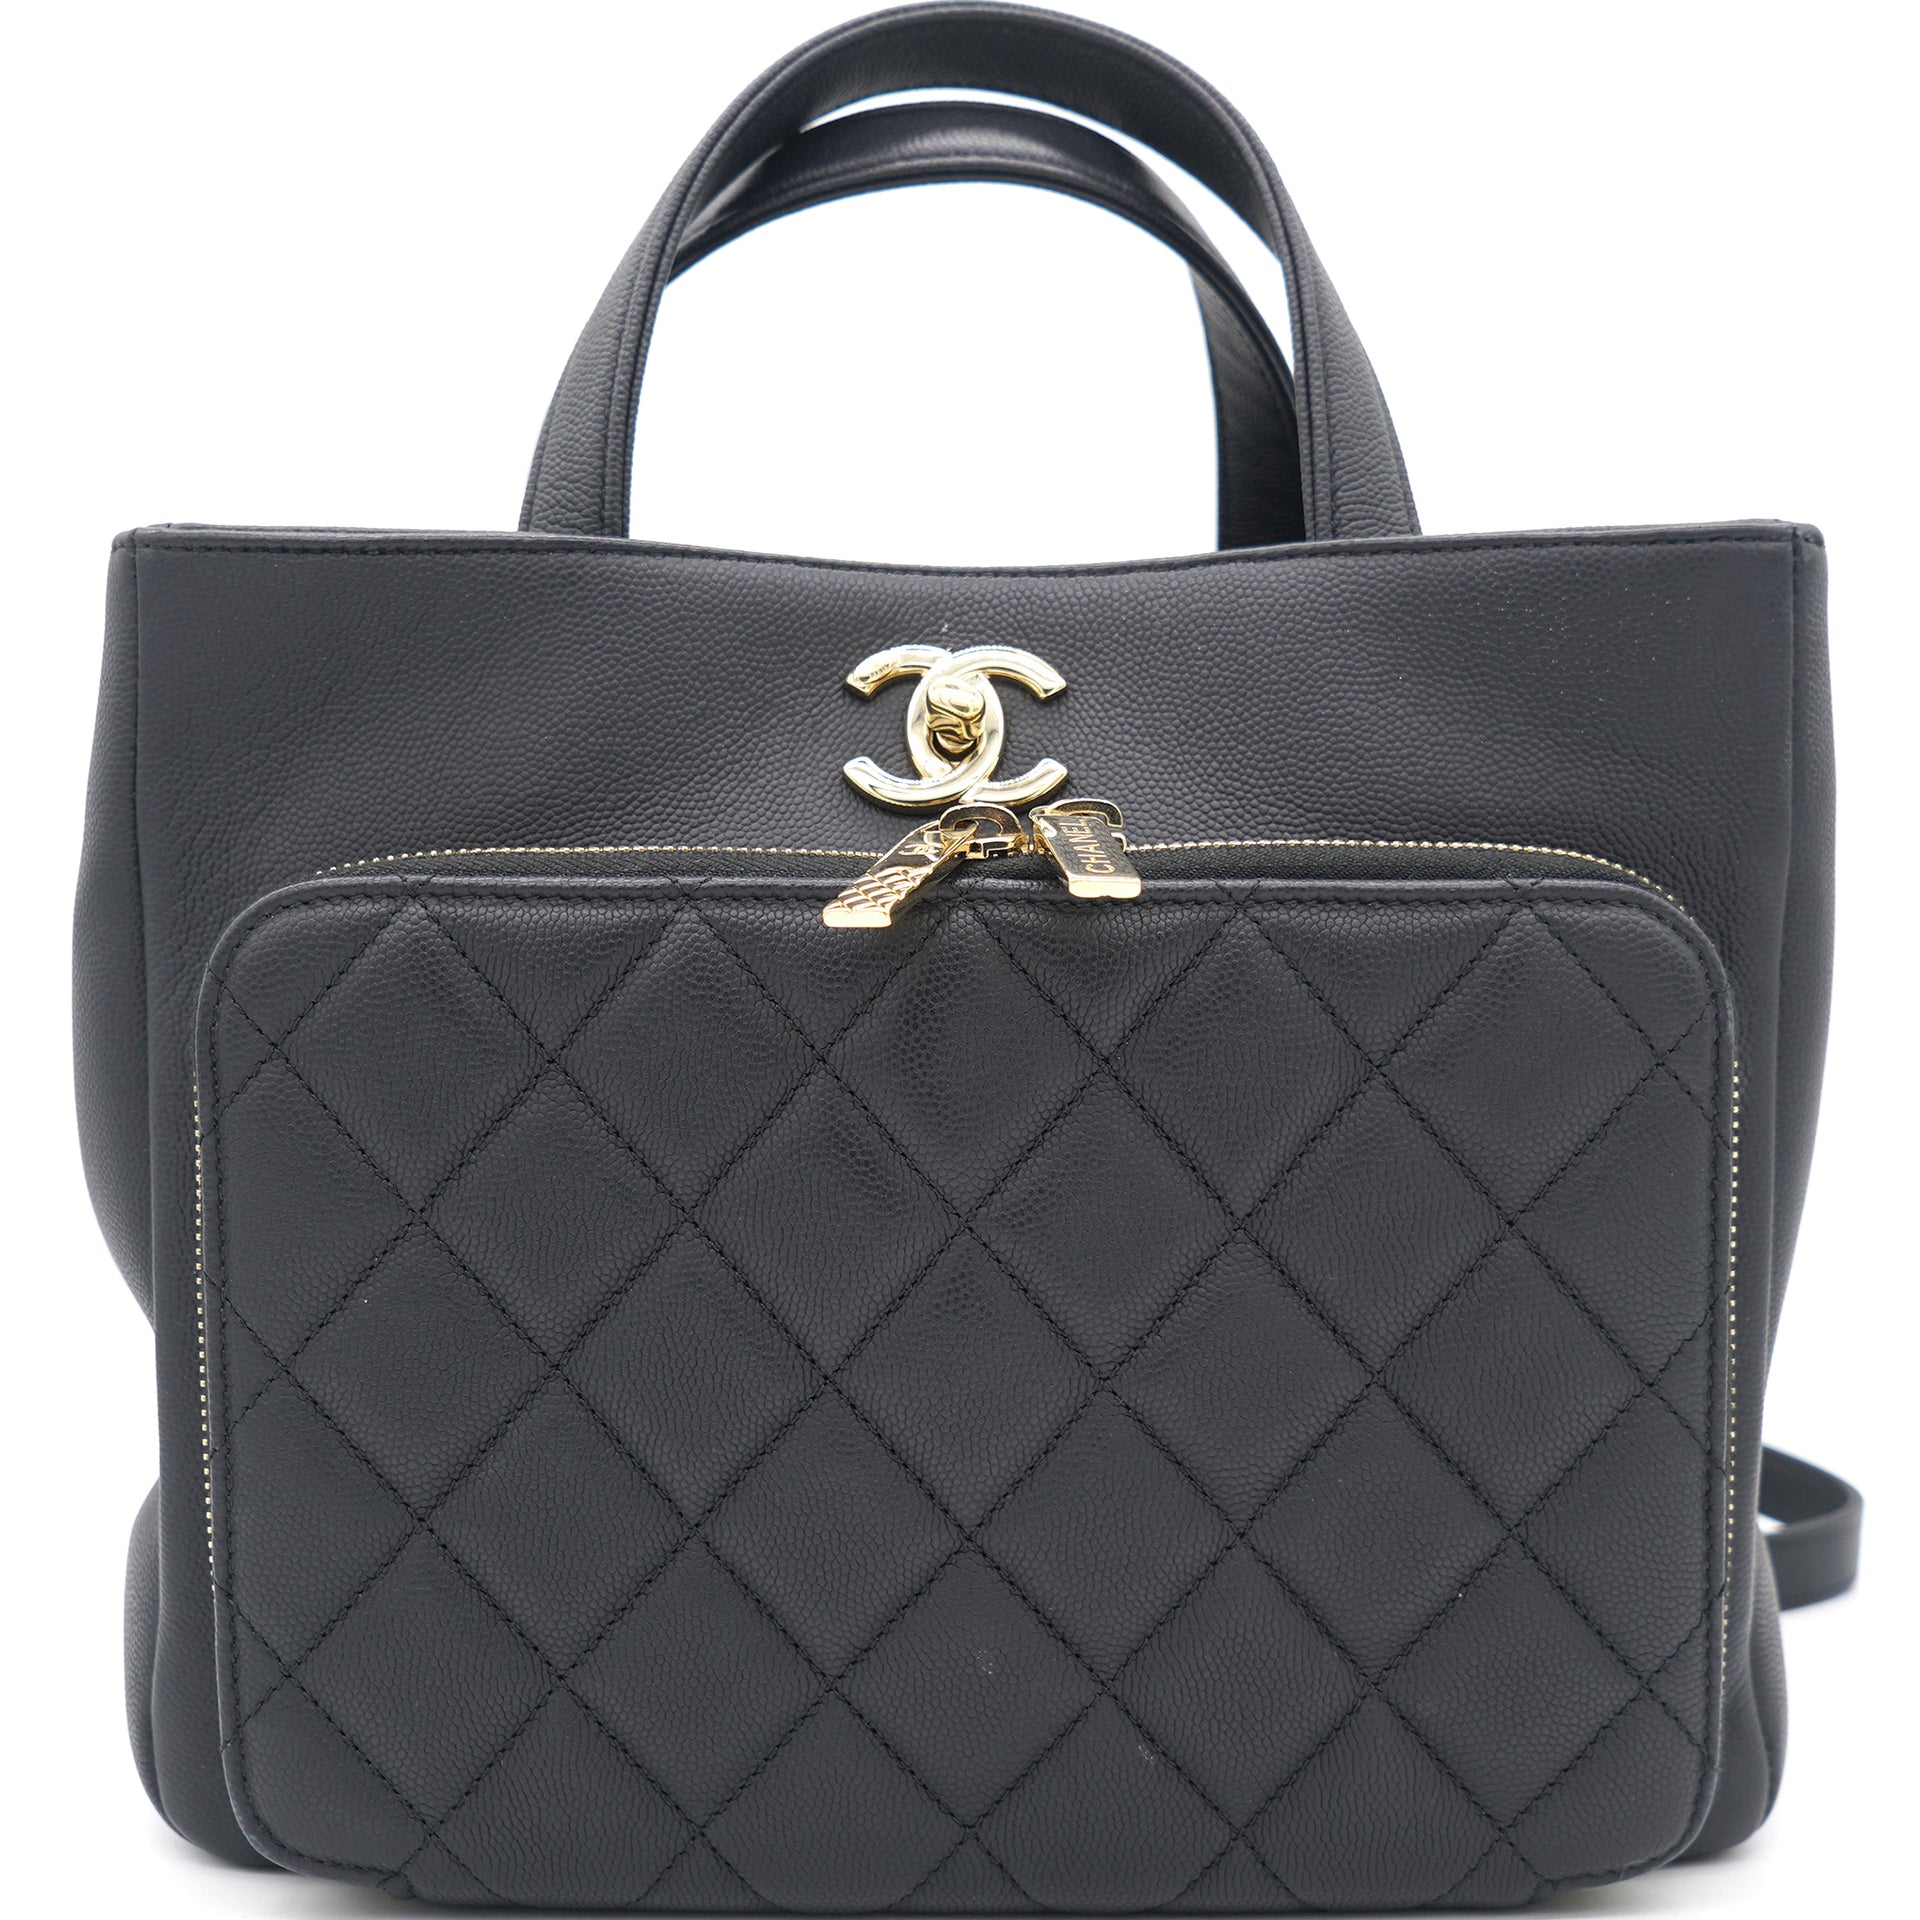 Chanel Business Affinity large shopping Bag